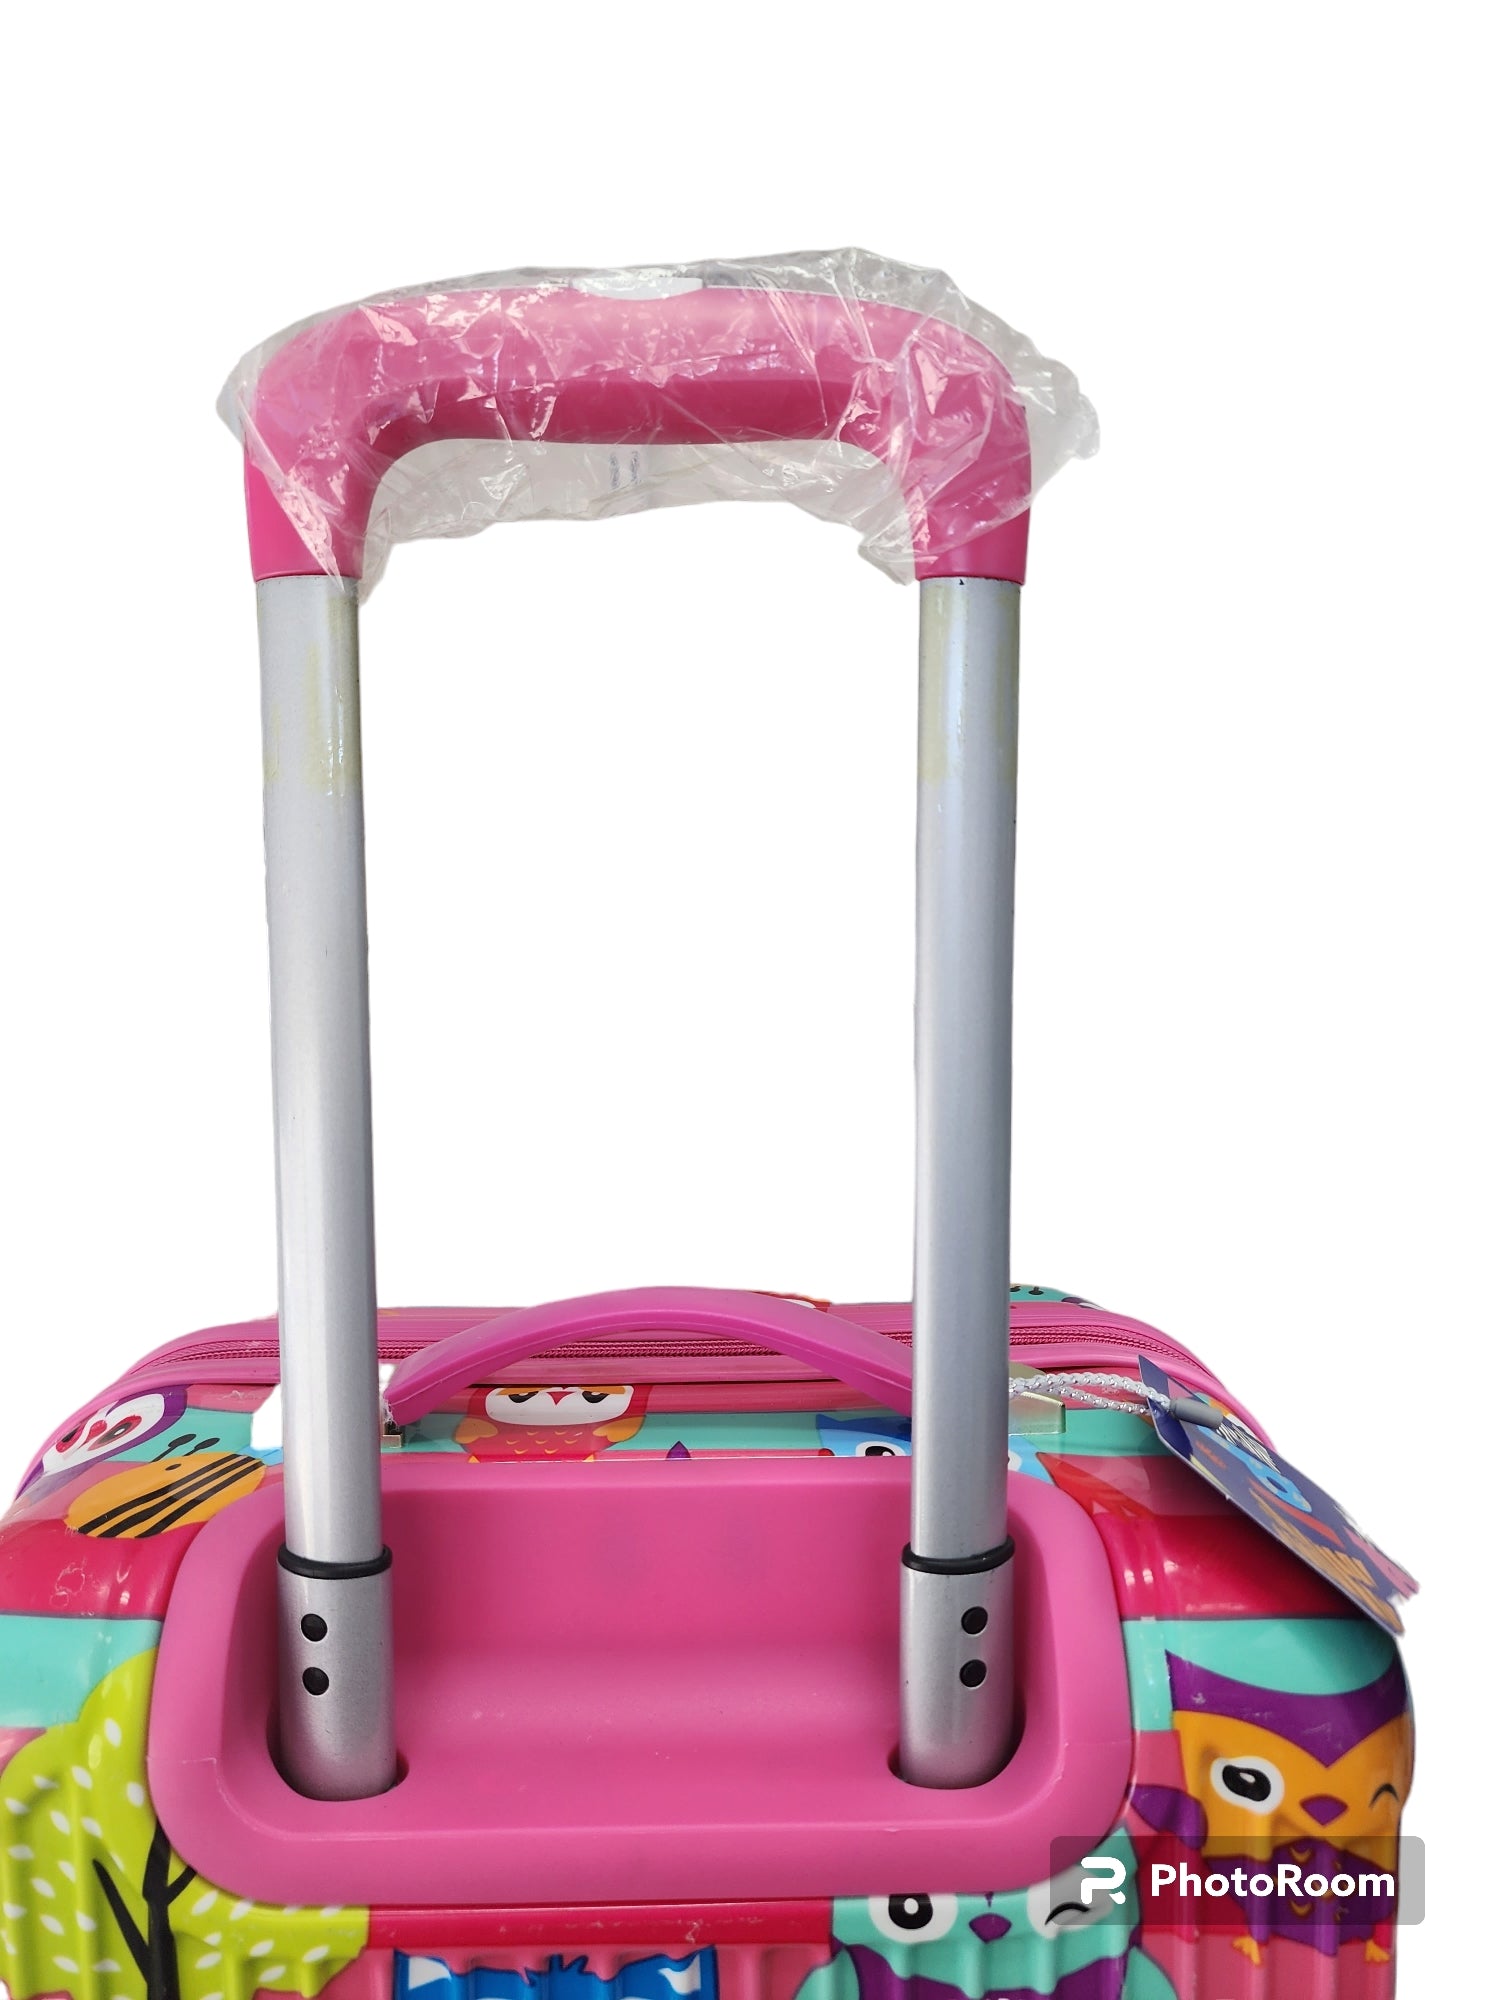 Kidz Bagz -55cm Owl print spinner suitcase - Pink-3